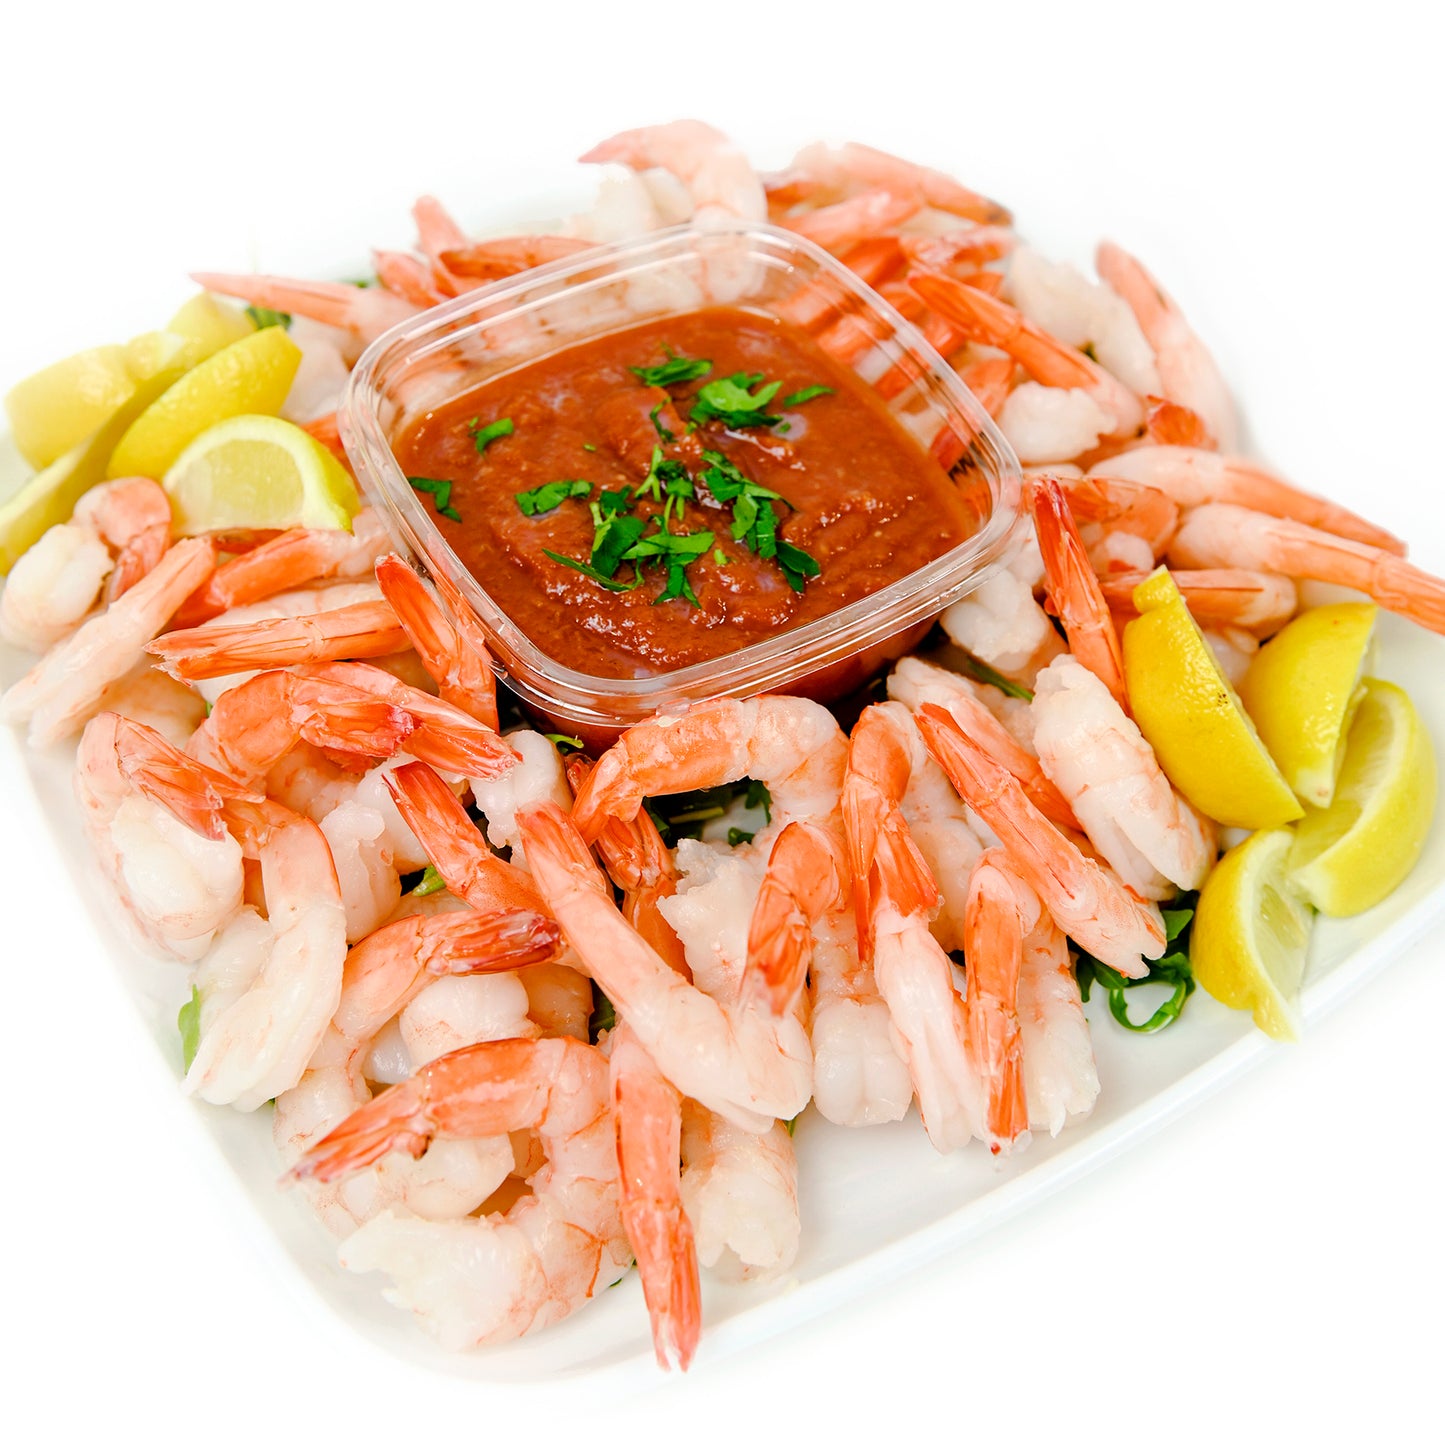 CLASSIC CHILLED JUMBO SHRIMP PLATTER Meal delivery Orlando shrimp cocktail Platter